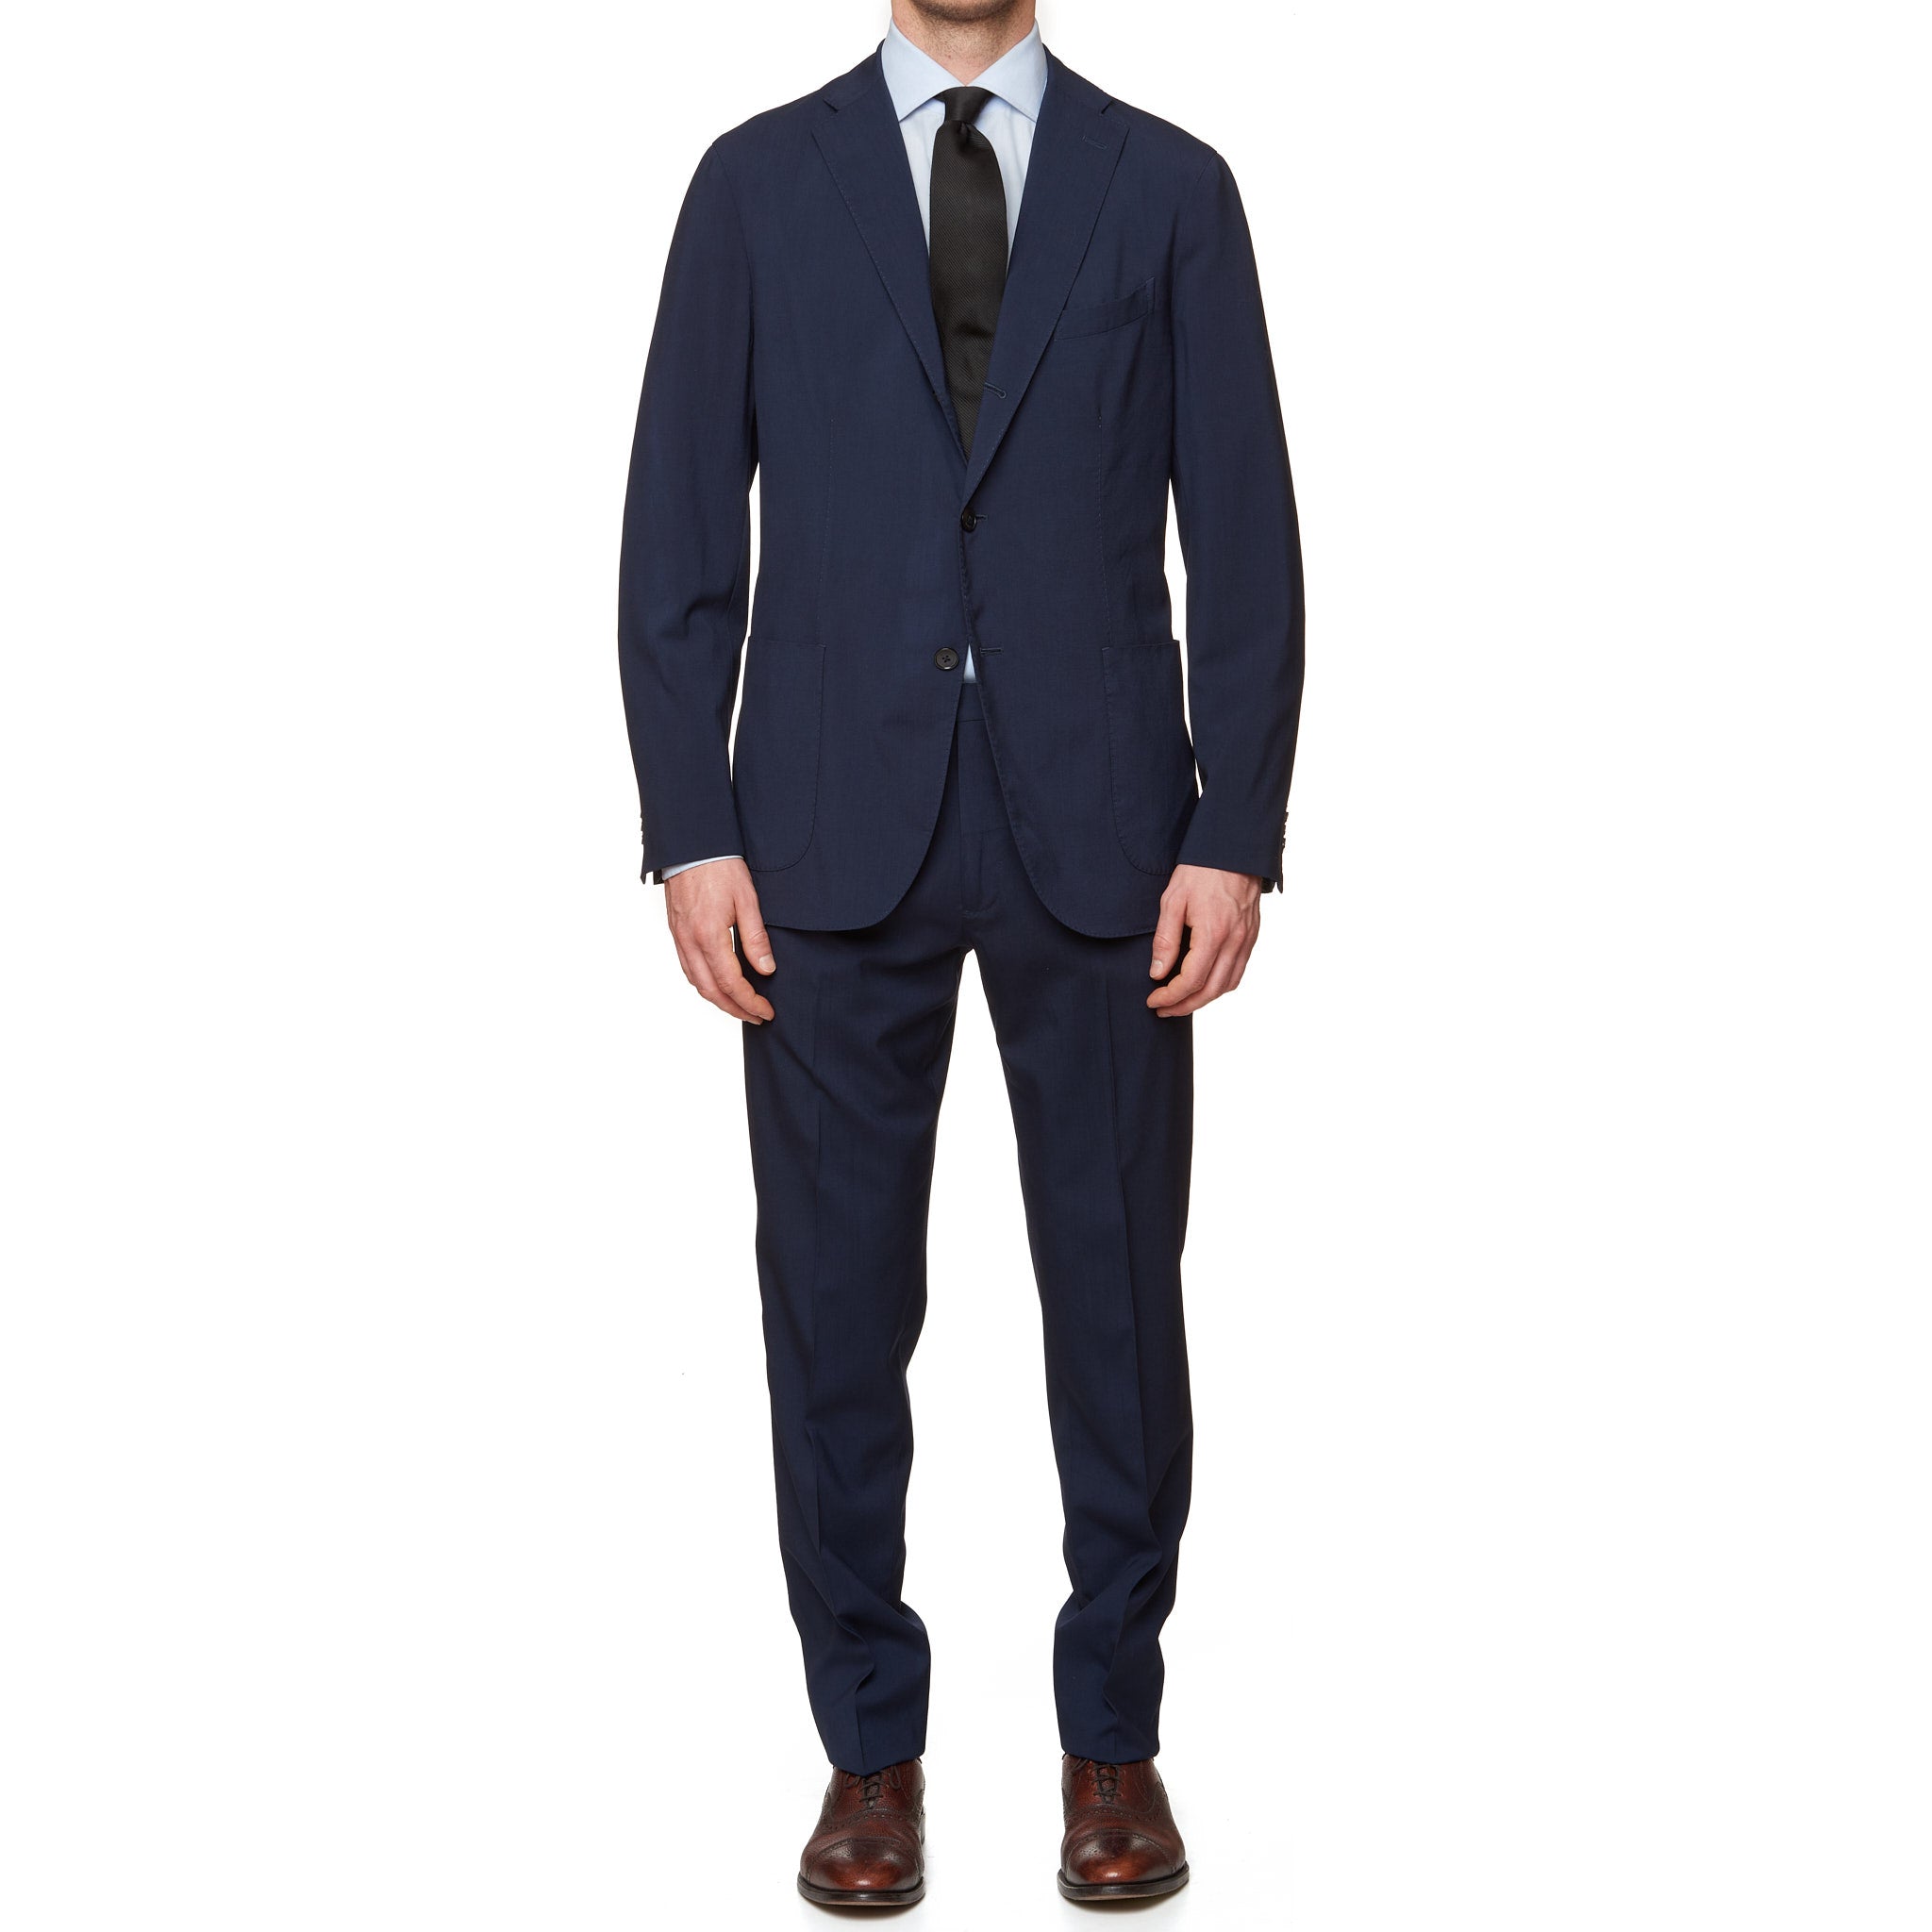 BOGLIOLI Milano "K. Jacket" Navy Blue Virgin Wool Unlined Suit US 46 EU 56 NEW BOGLIOLI